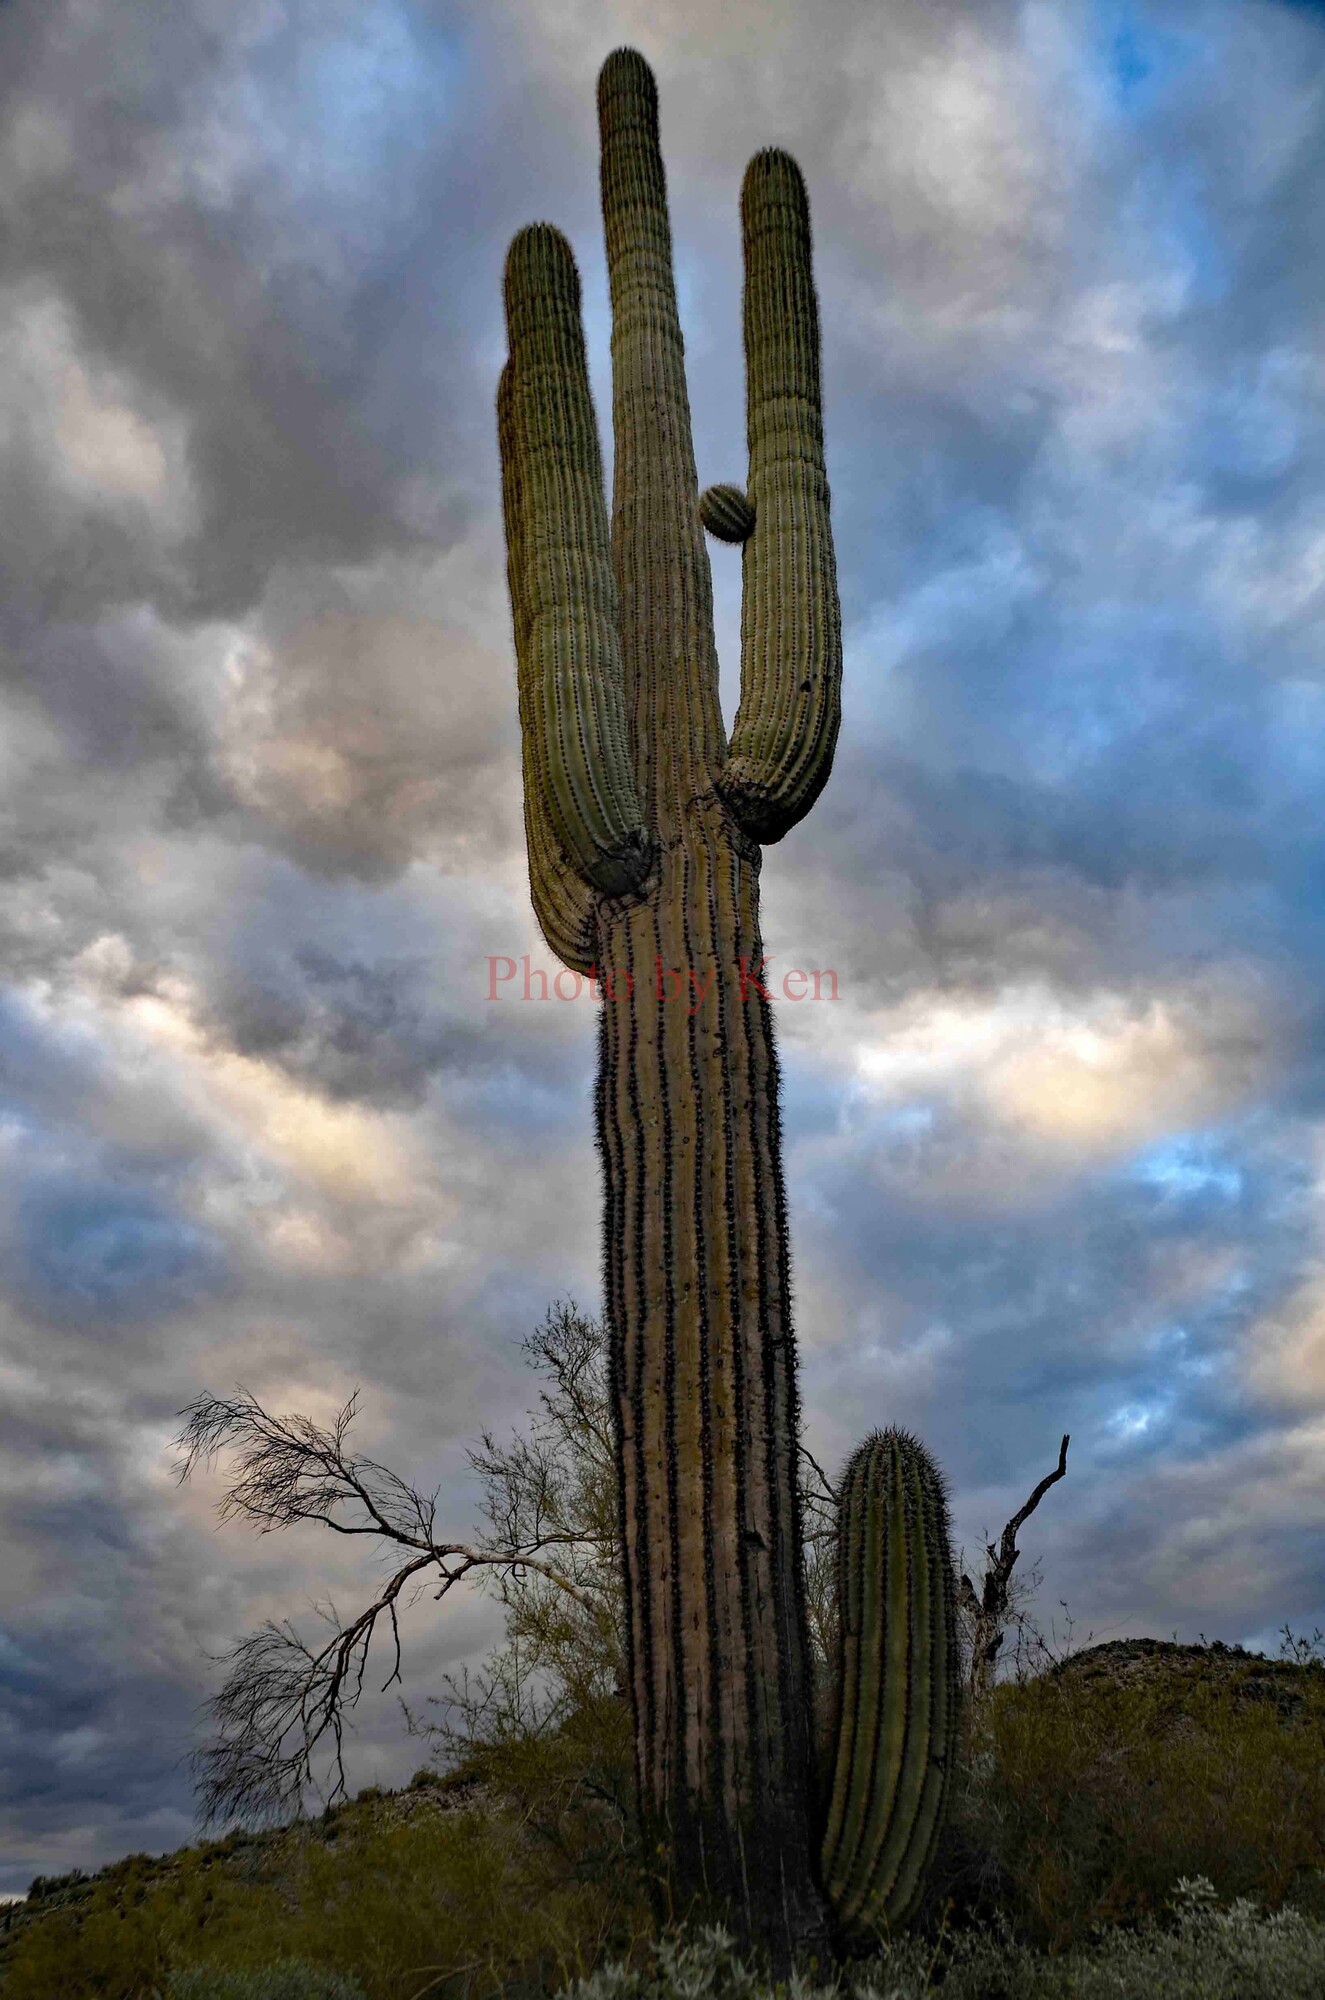 photographer Photos by Ken landscape  photo taken at Scottsdale, AZ